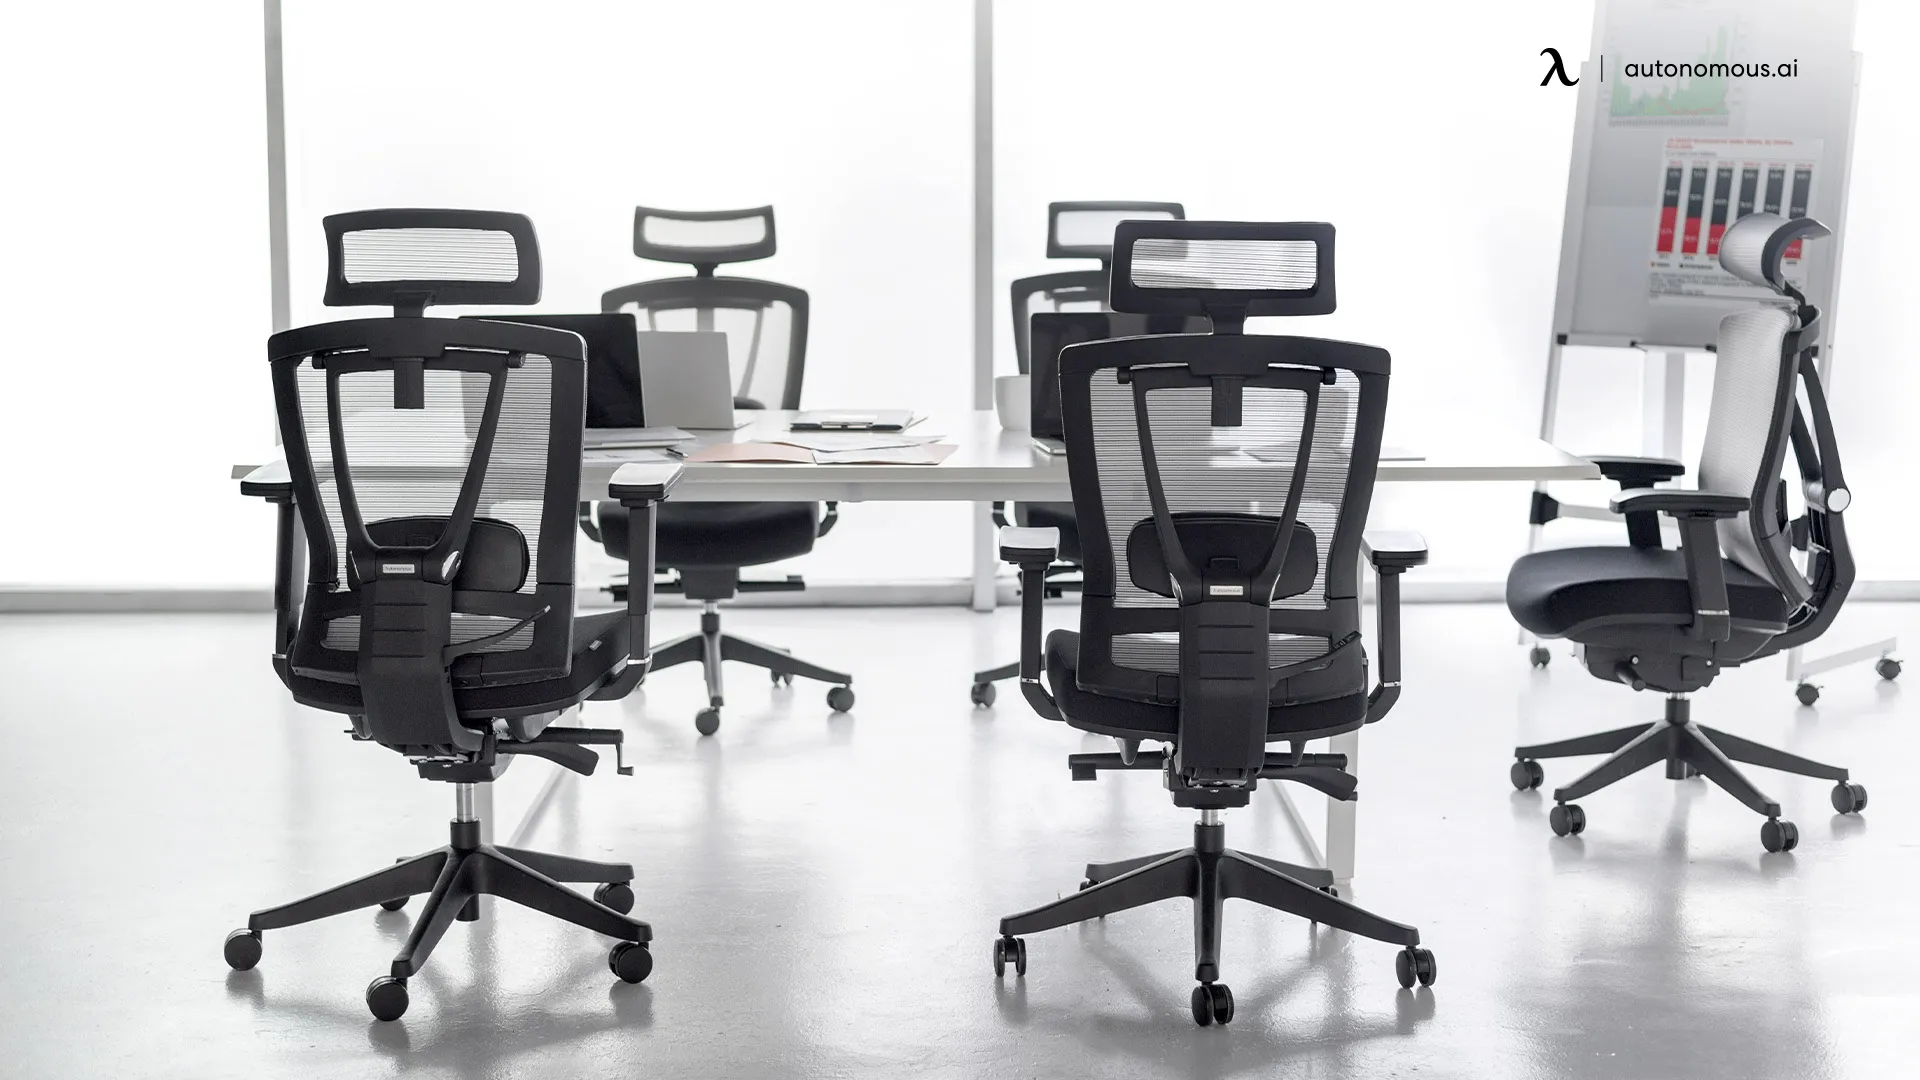 Autonomous ErgoChair Pro - Best office chair with back support